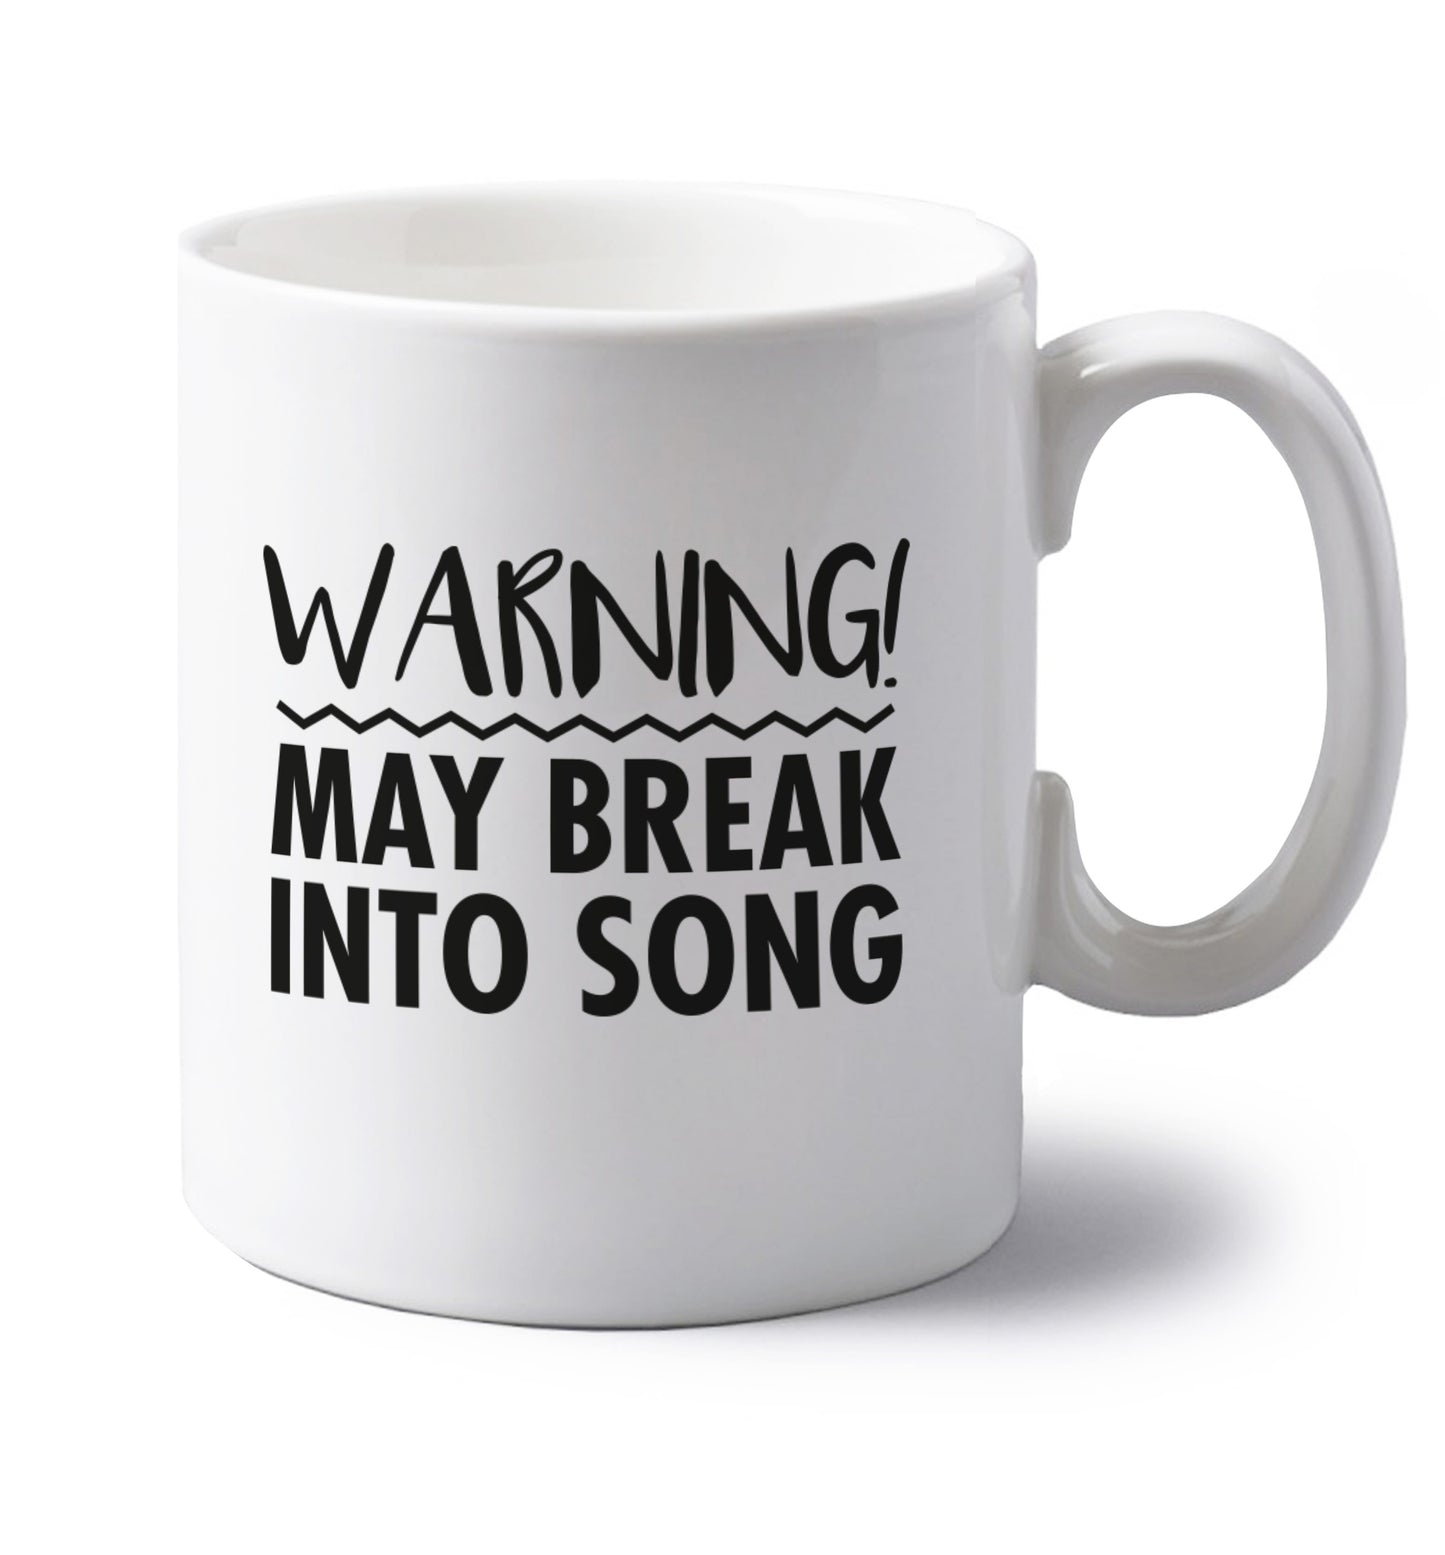 Warning may break into song left handed white ceramic mug 